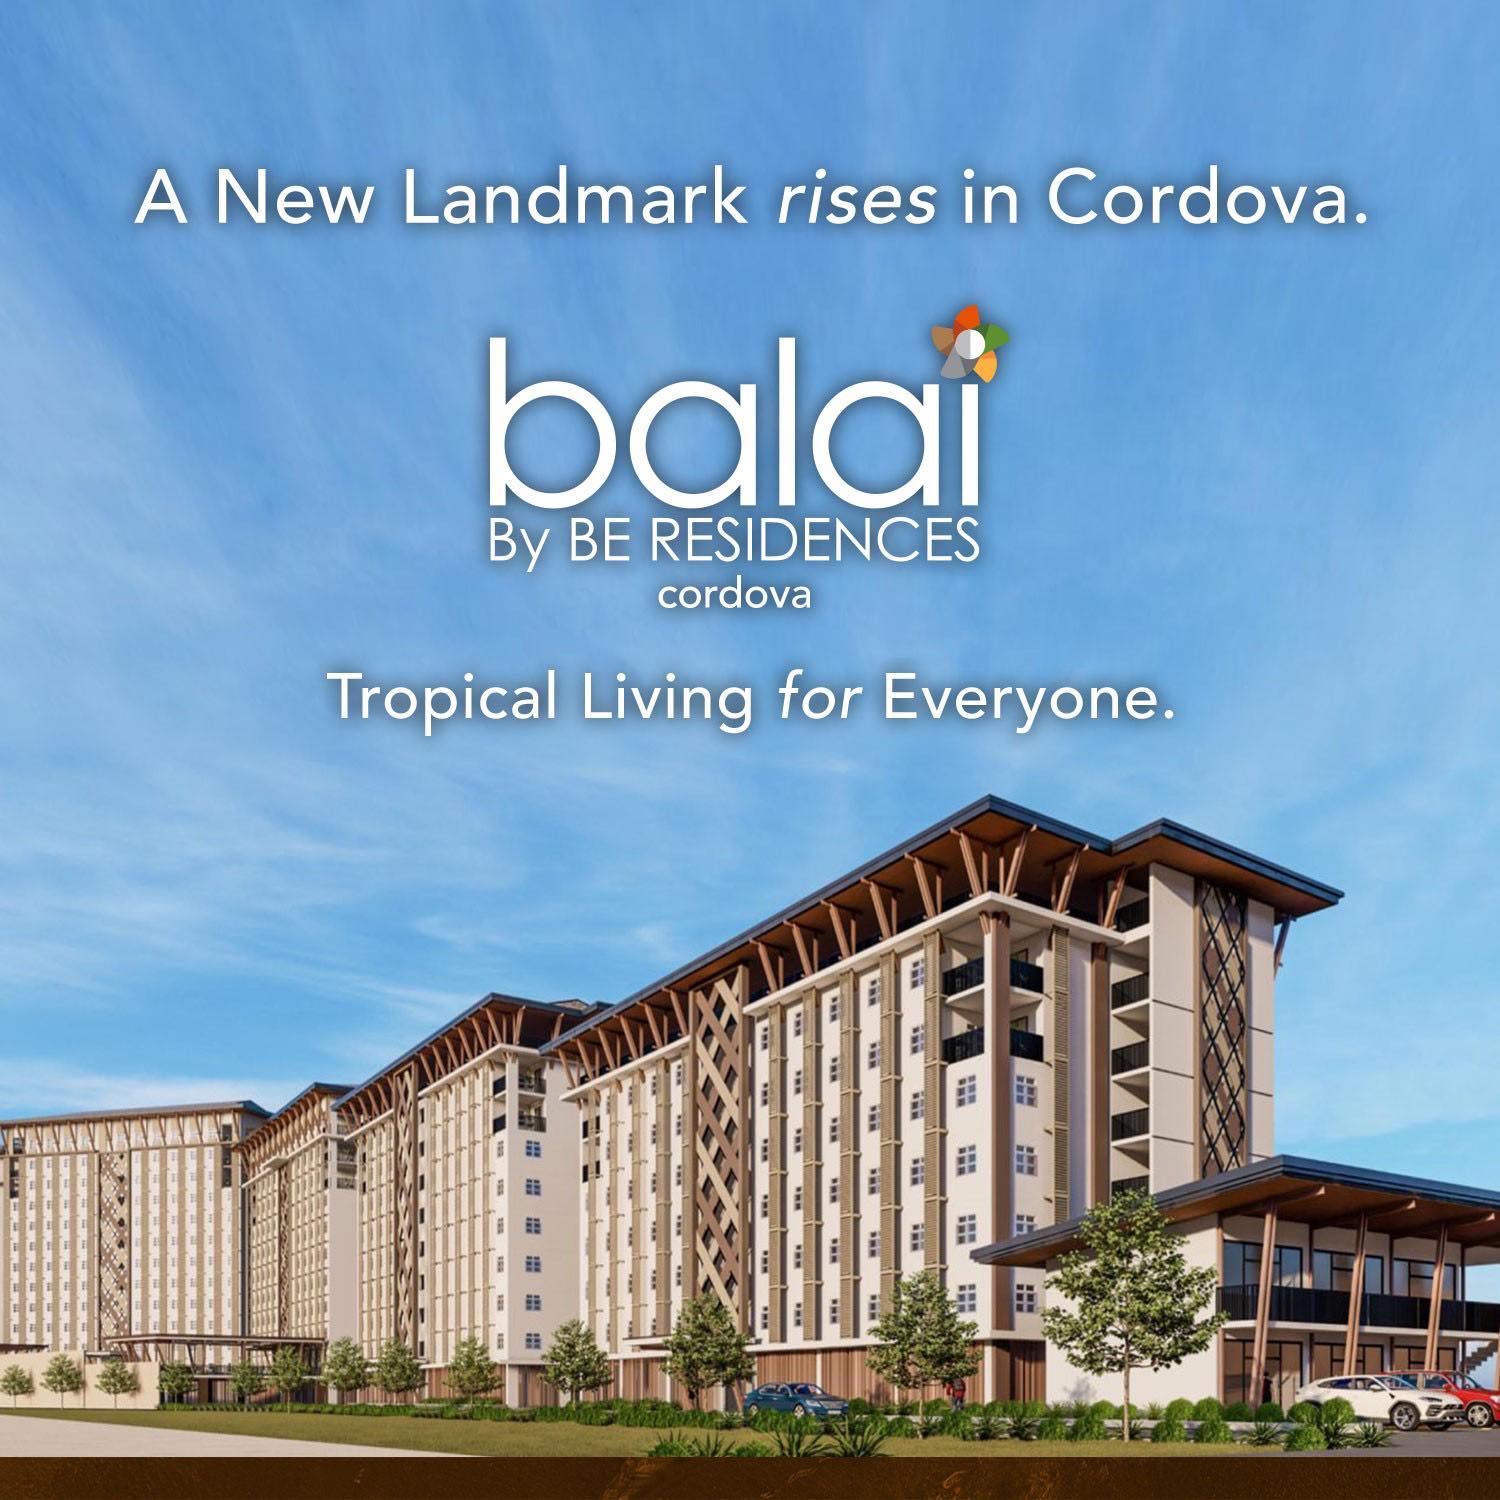 Balai by Be Residence Cordova